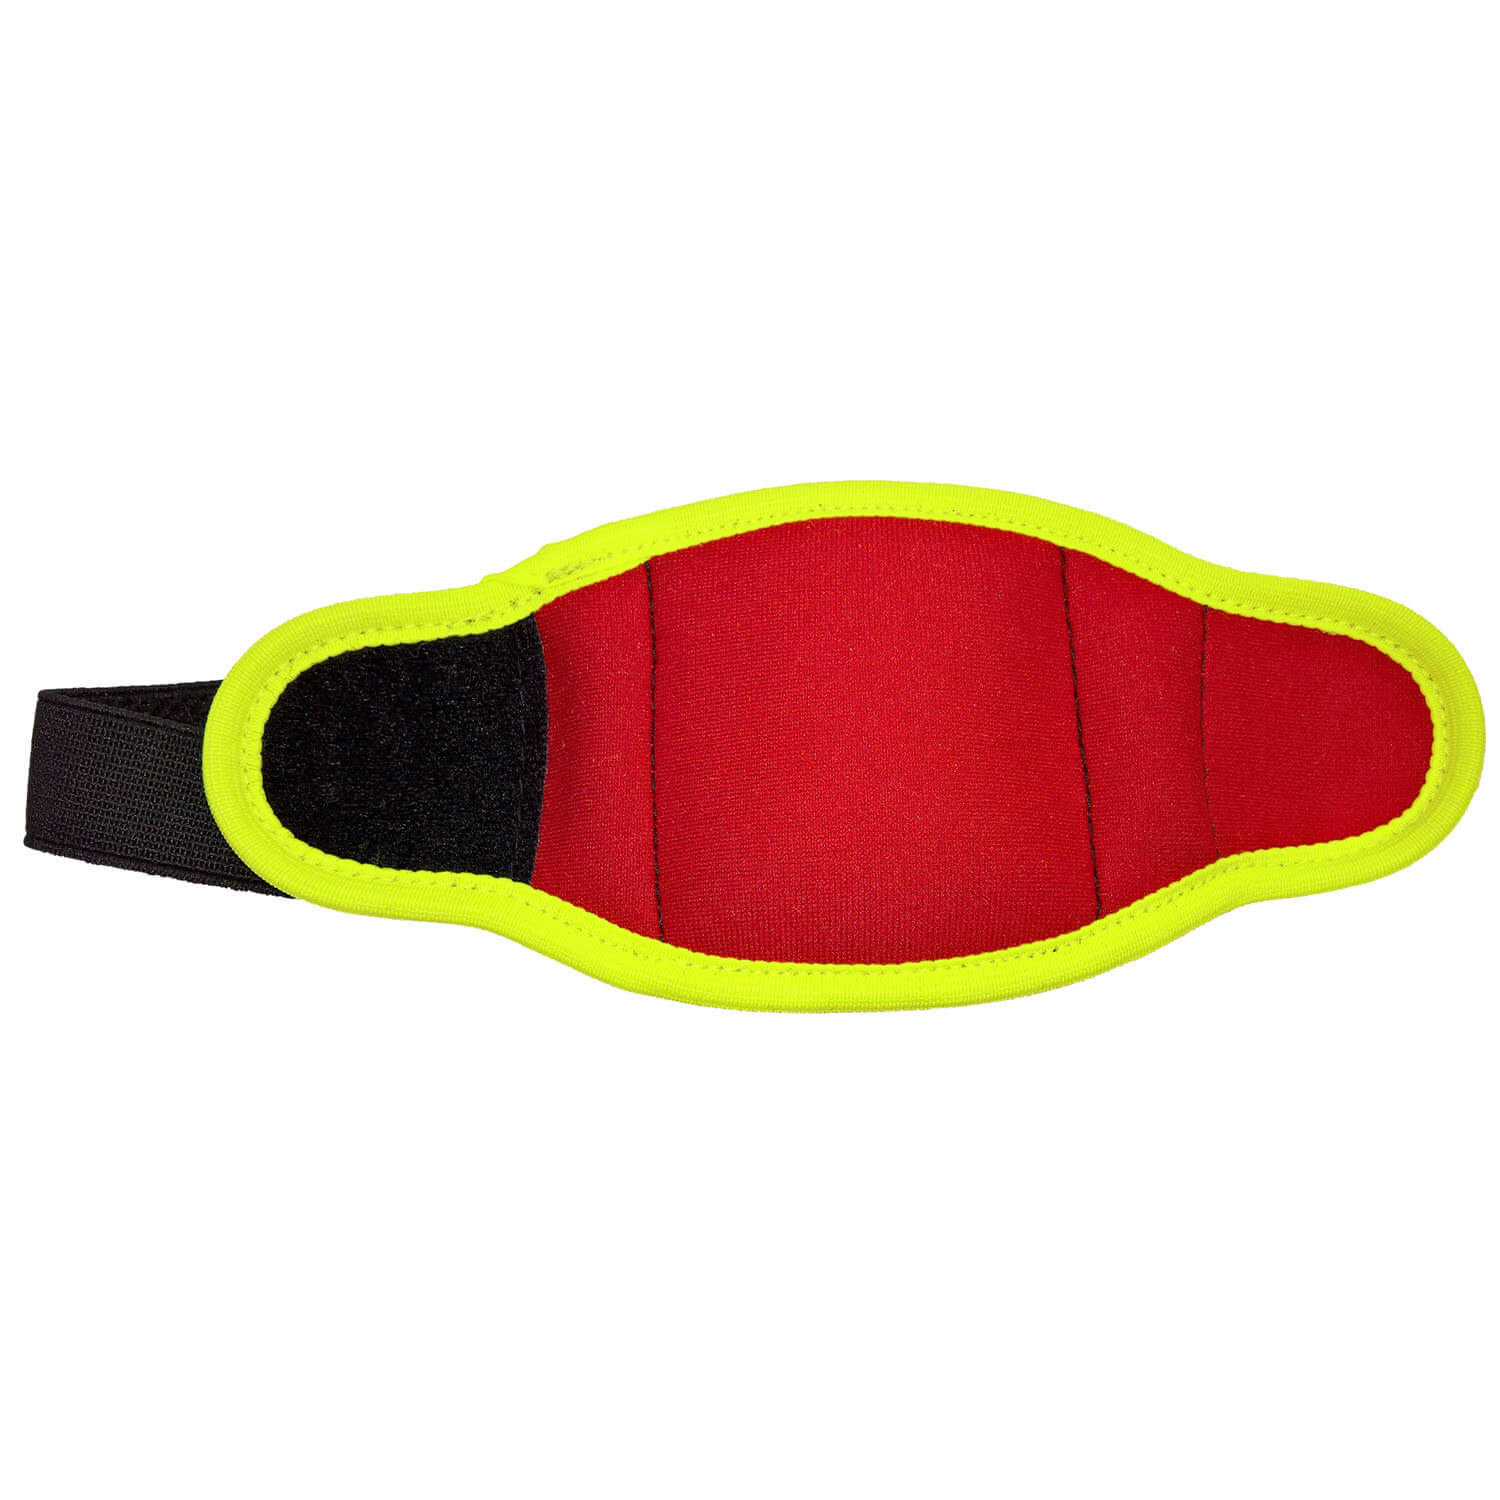 Niggeloh GPS-Tracker Bag (red/yellow) - Blood Trailing